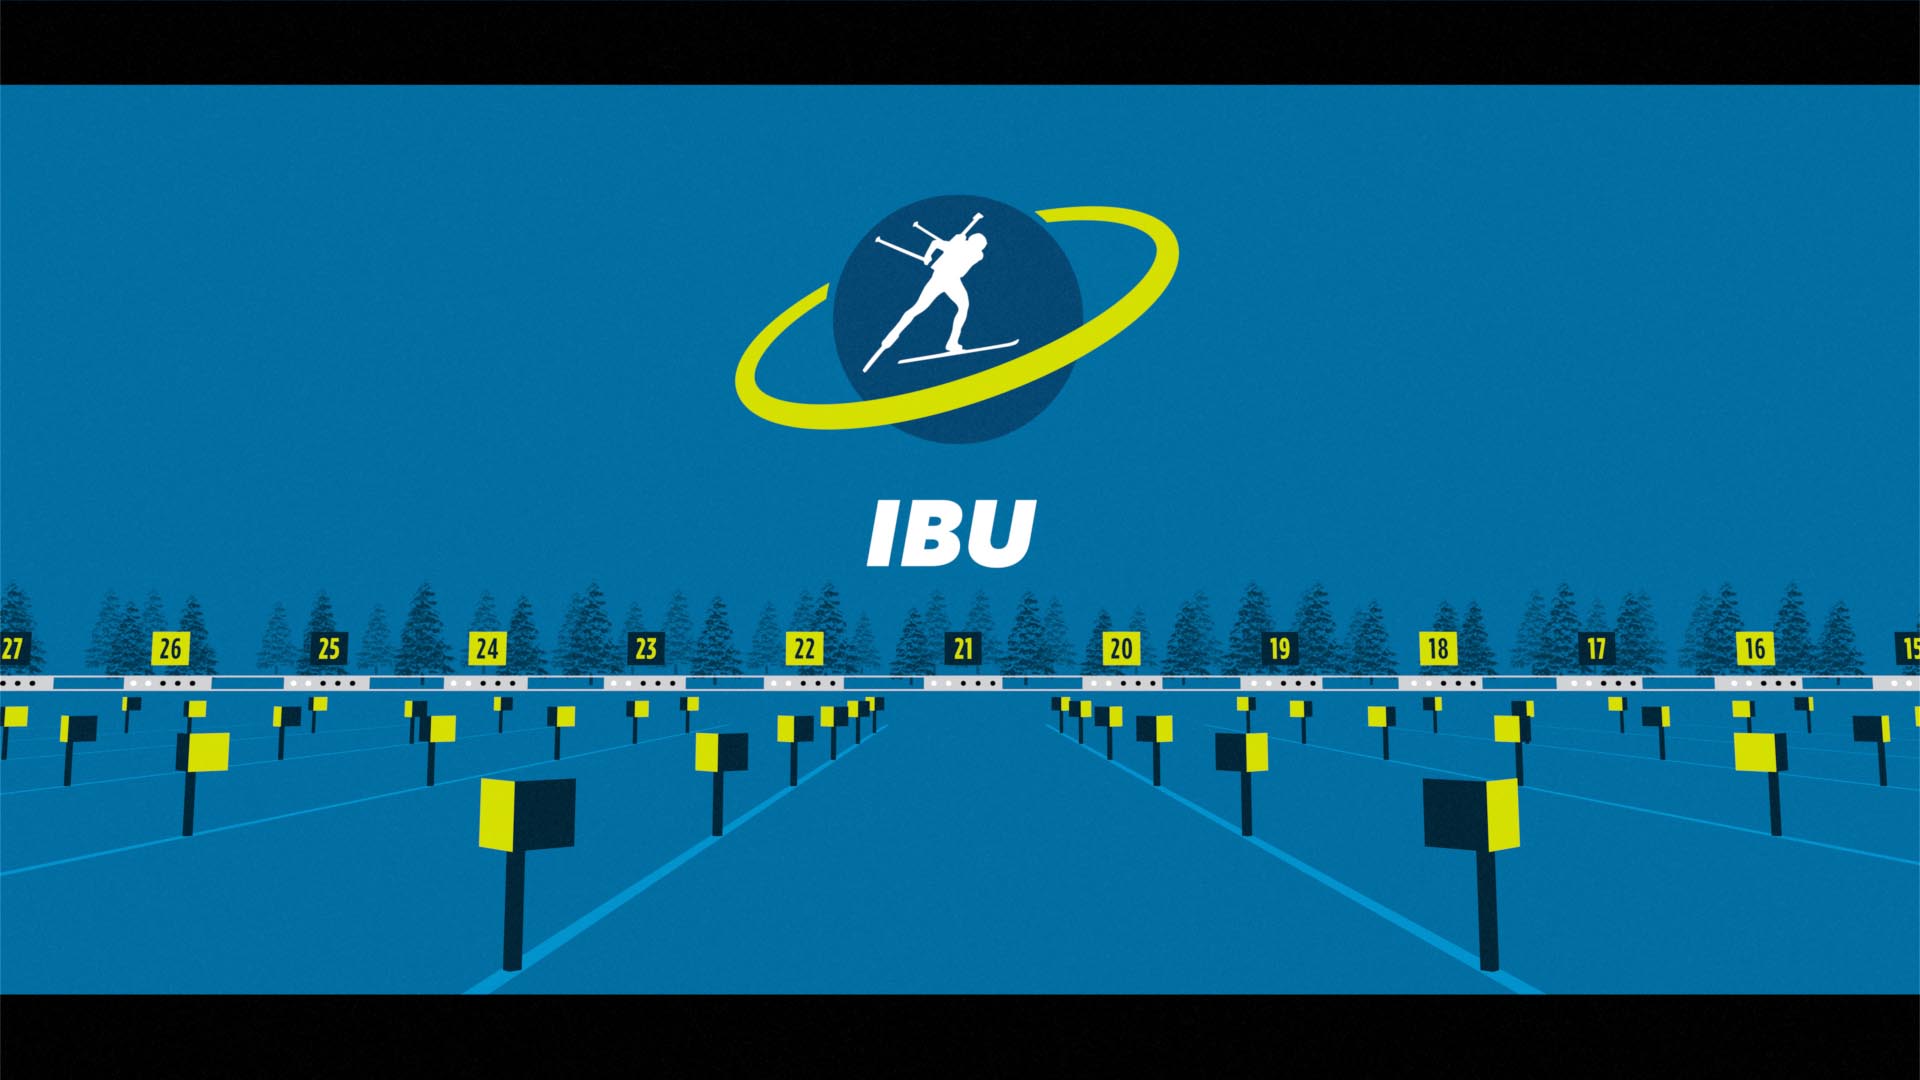 Международные биатлон. Биатлон ibu. Эмблема международного Союза биатлонистов. Международный Союз биатлонистов (ibu). Ibu логотип.